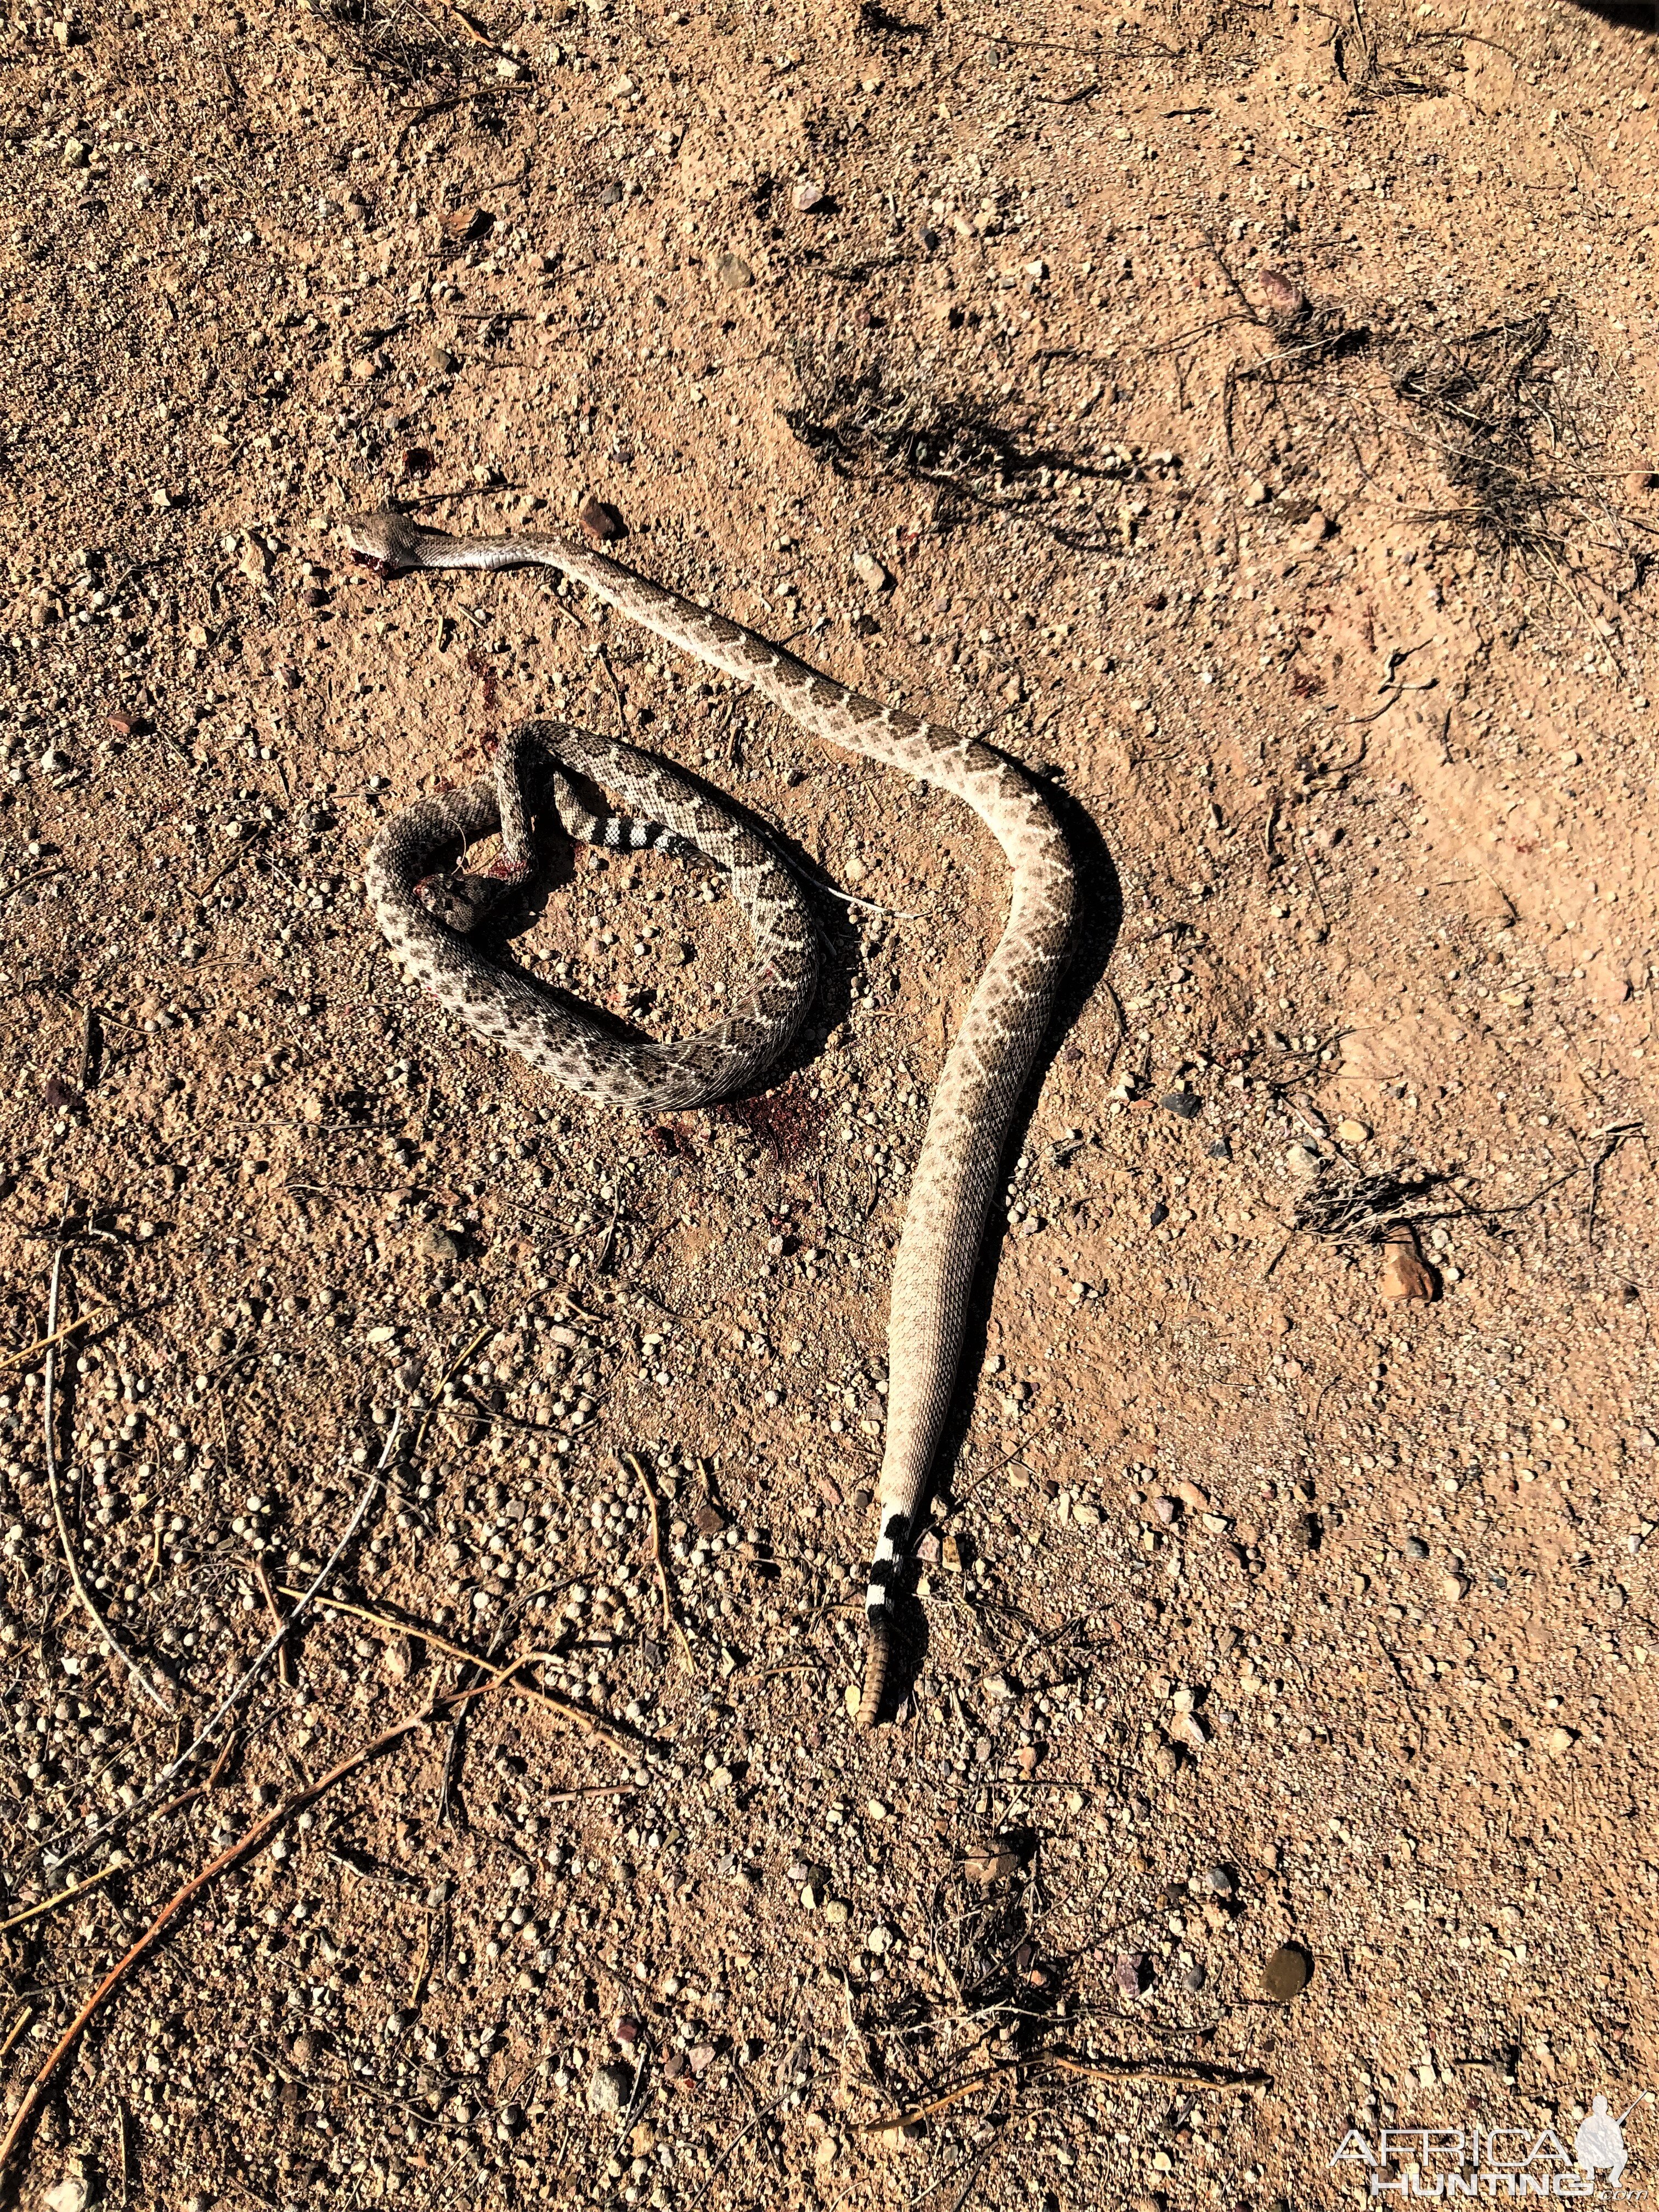 Western Diamondback Rattle Snakes